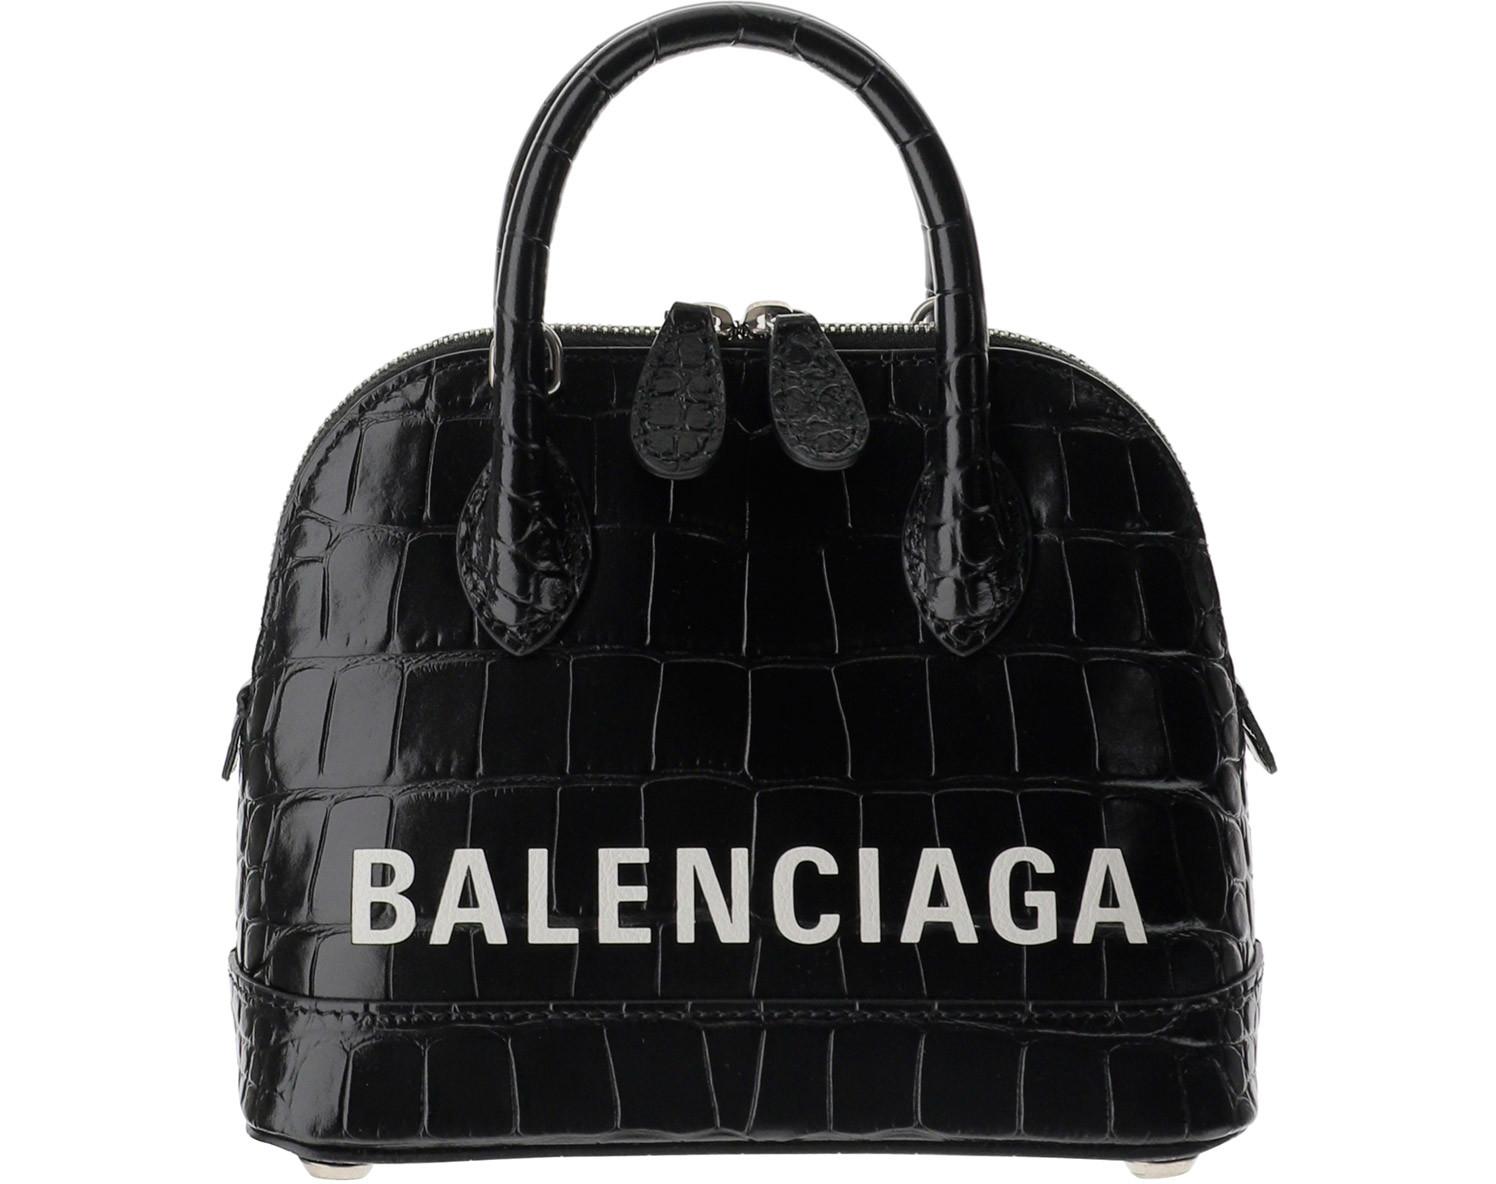 Balenciaga Black Croco Embossed Leather Ville Top Bowler Bag at FORZIERI